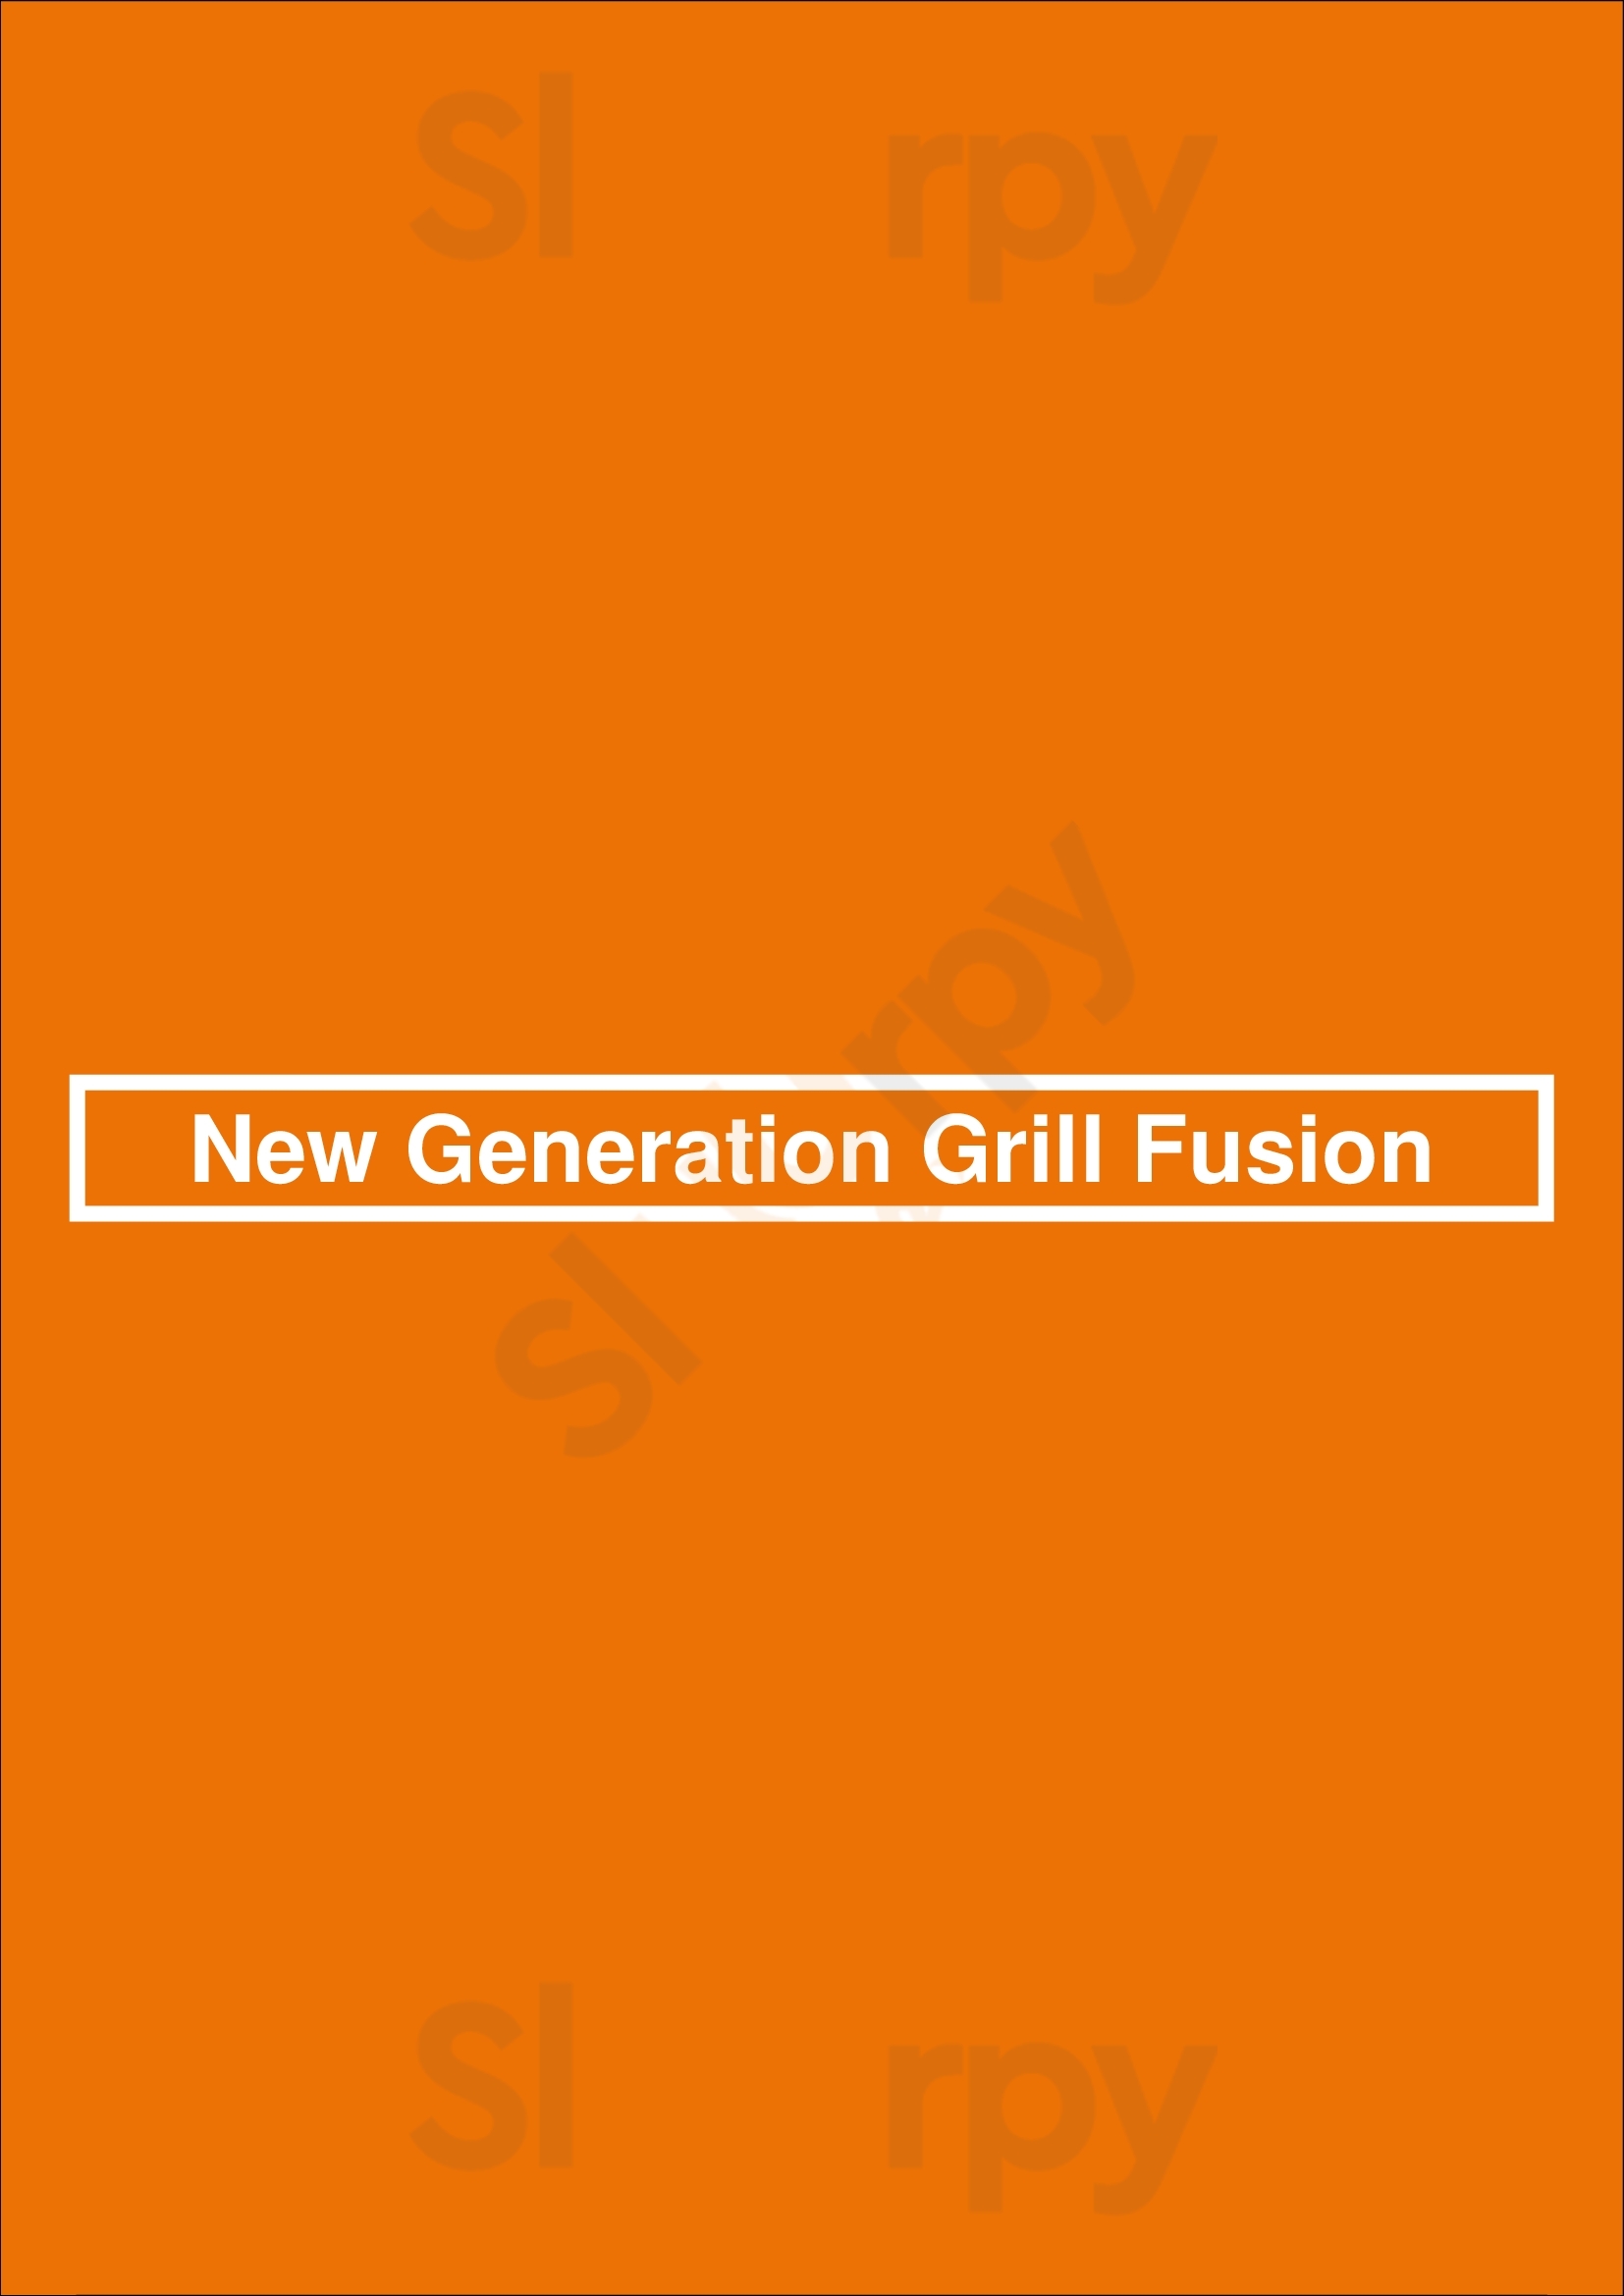 New Generation Grill Fusion Toronto Menu - 1